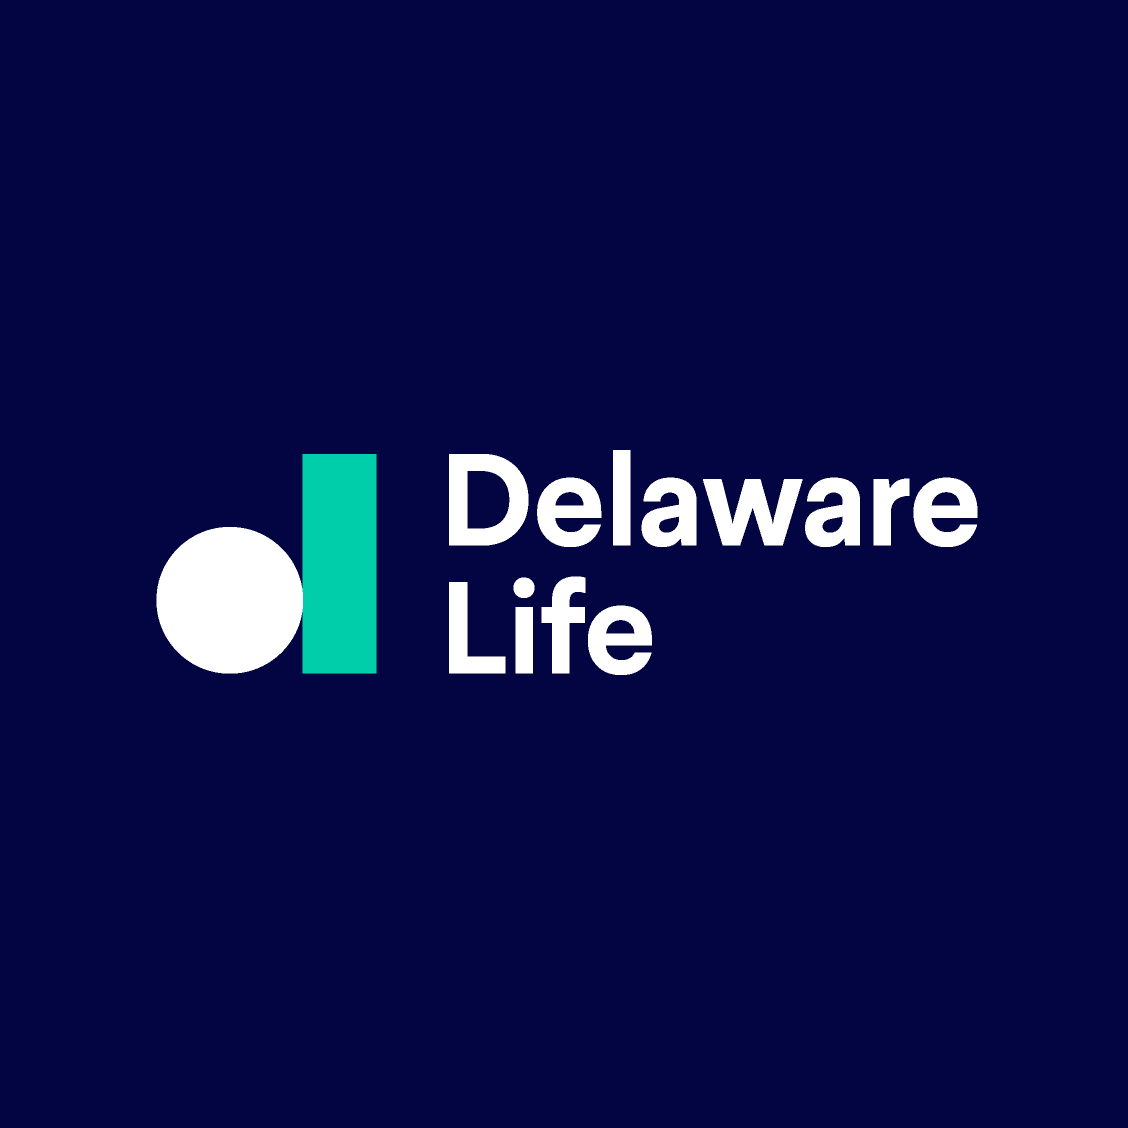 Delaware Life